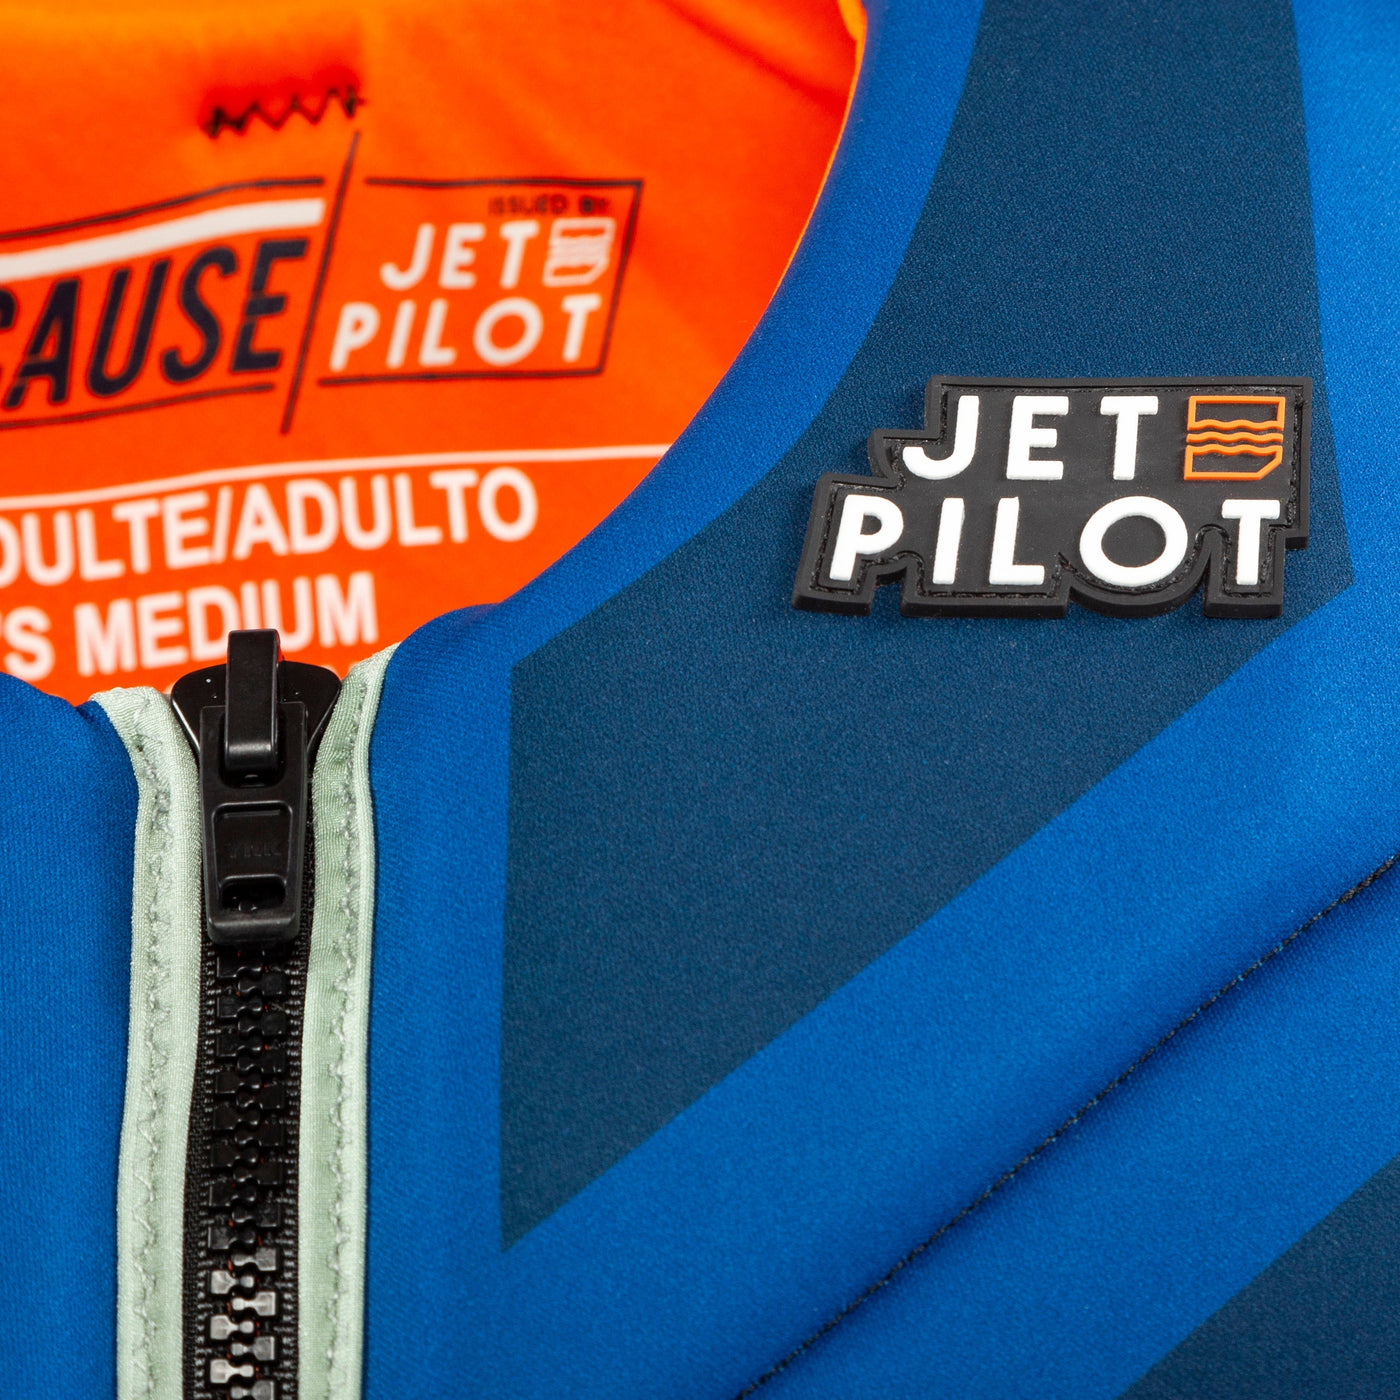 Closeup shot of the Jetpilot Cause CGA Vest logo.